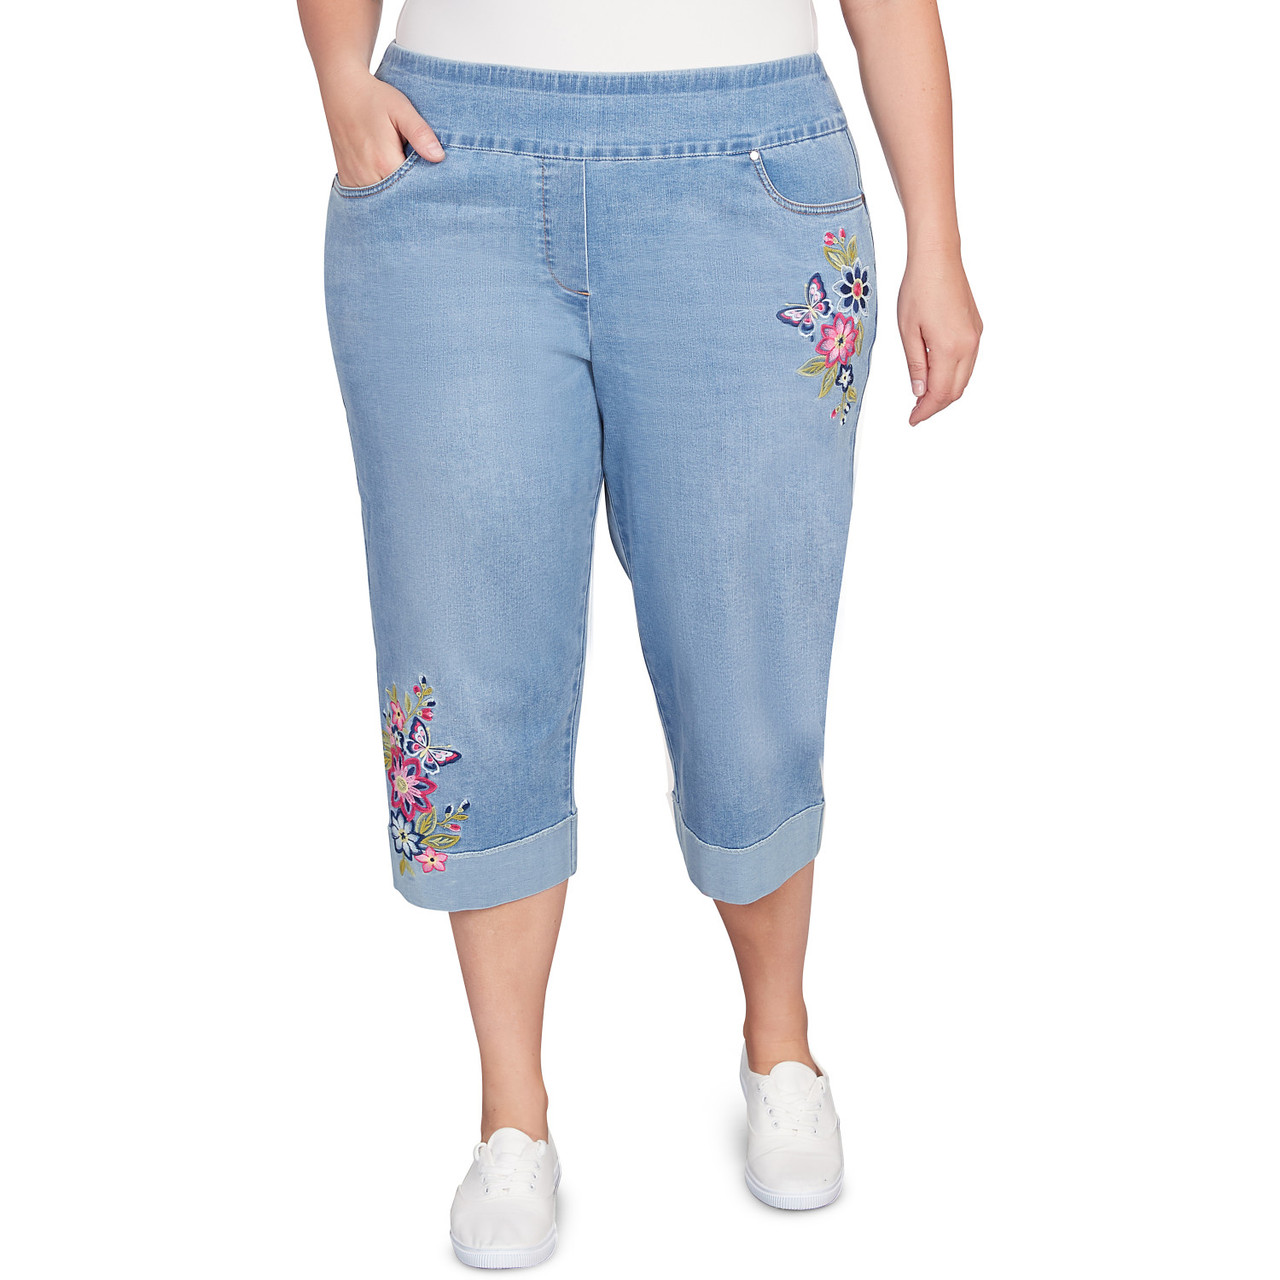 1826 New Capri Jeans Women's Denim Plus Size 18 Blue Embellished